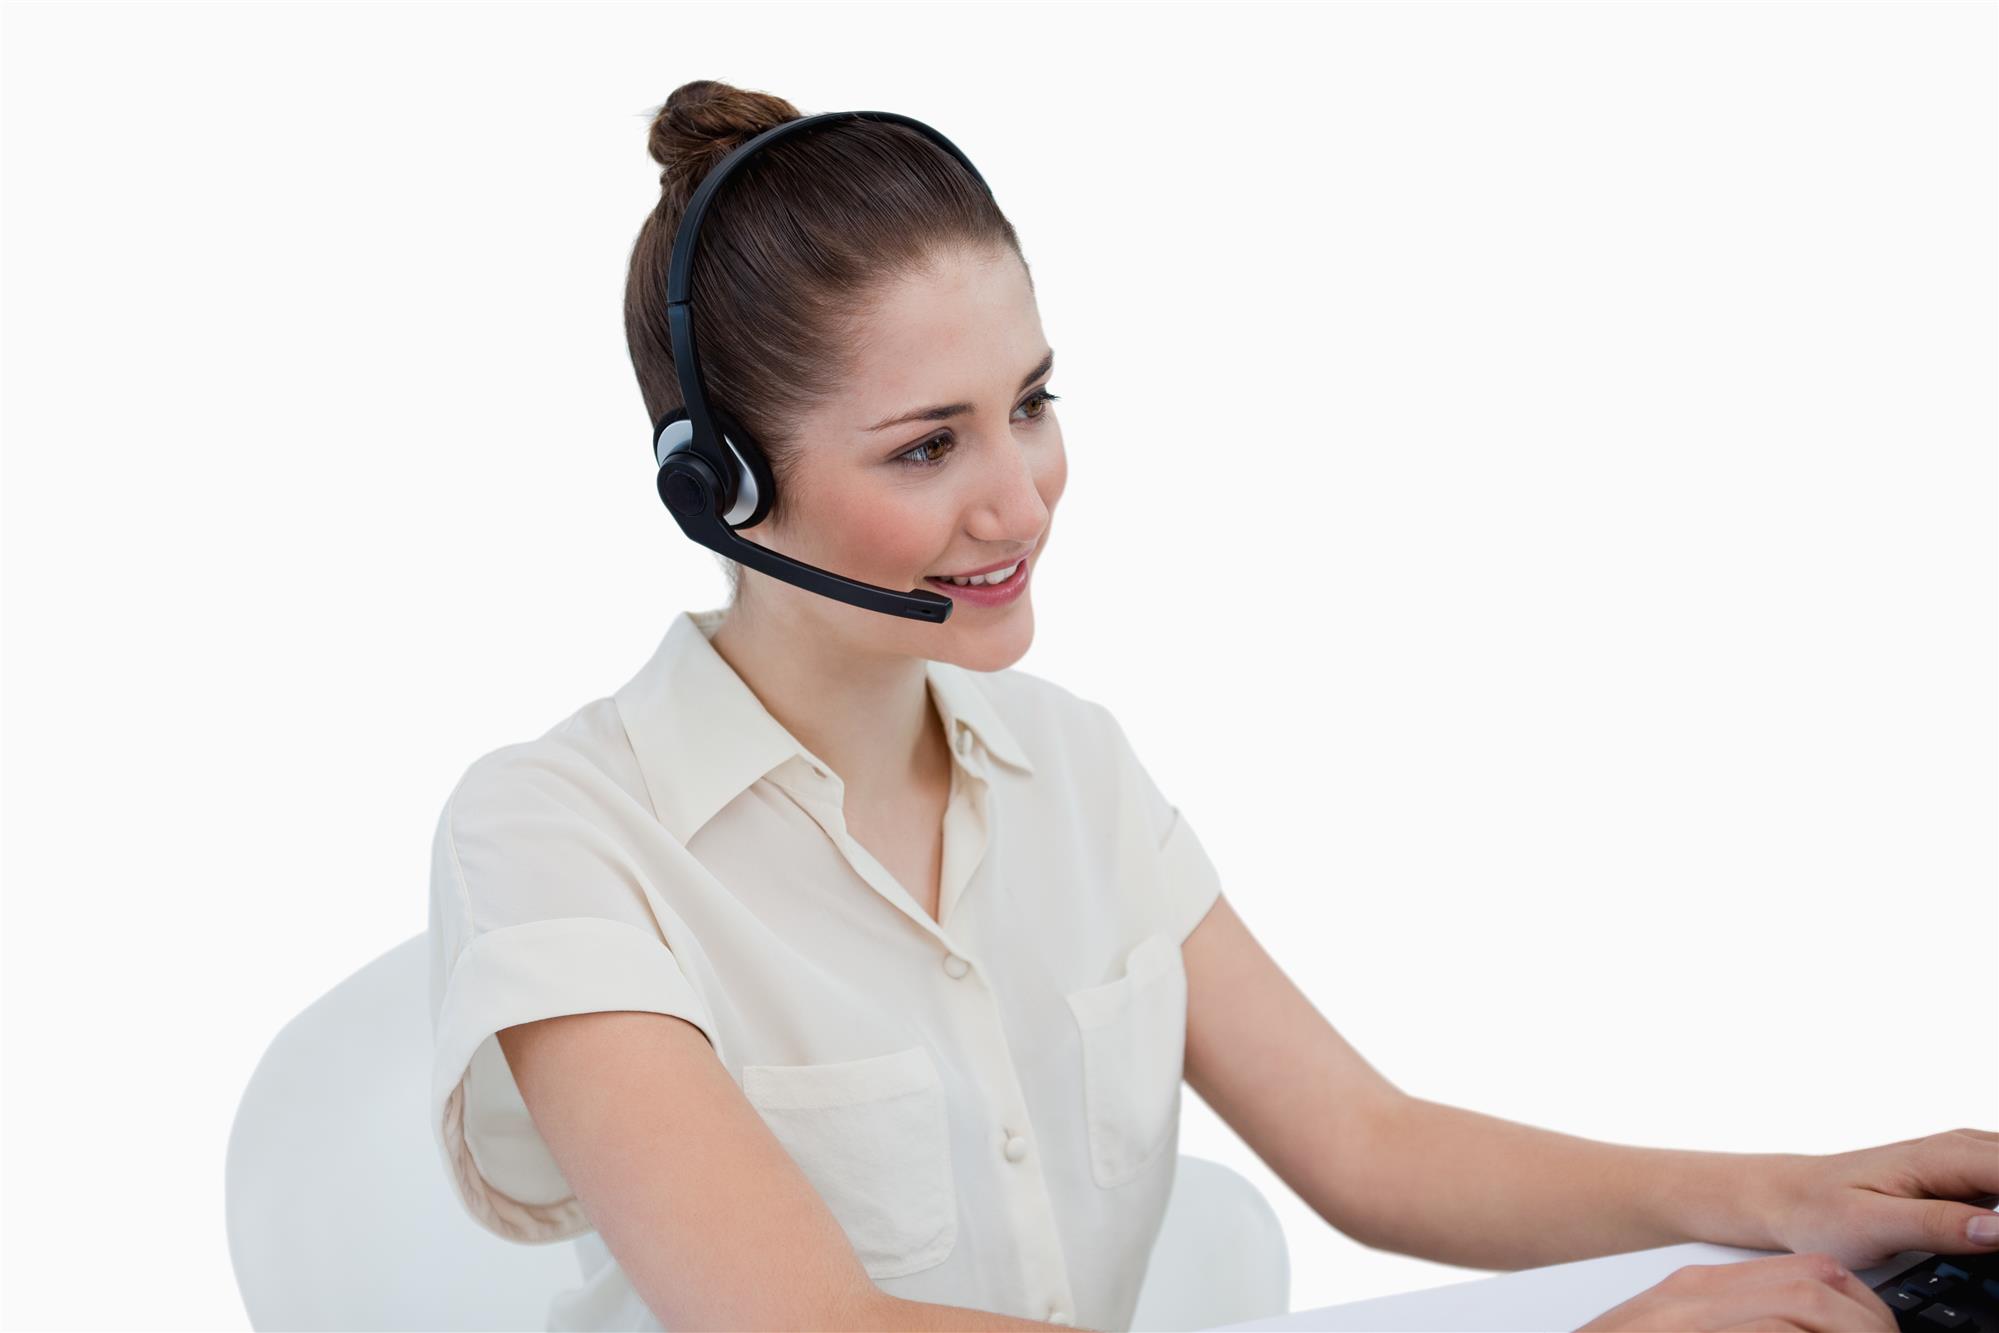 Call Center employee on a headset